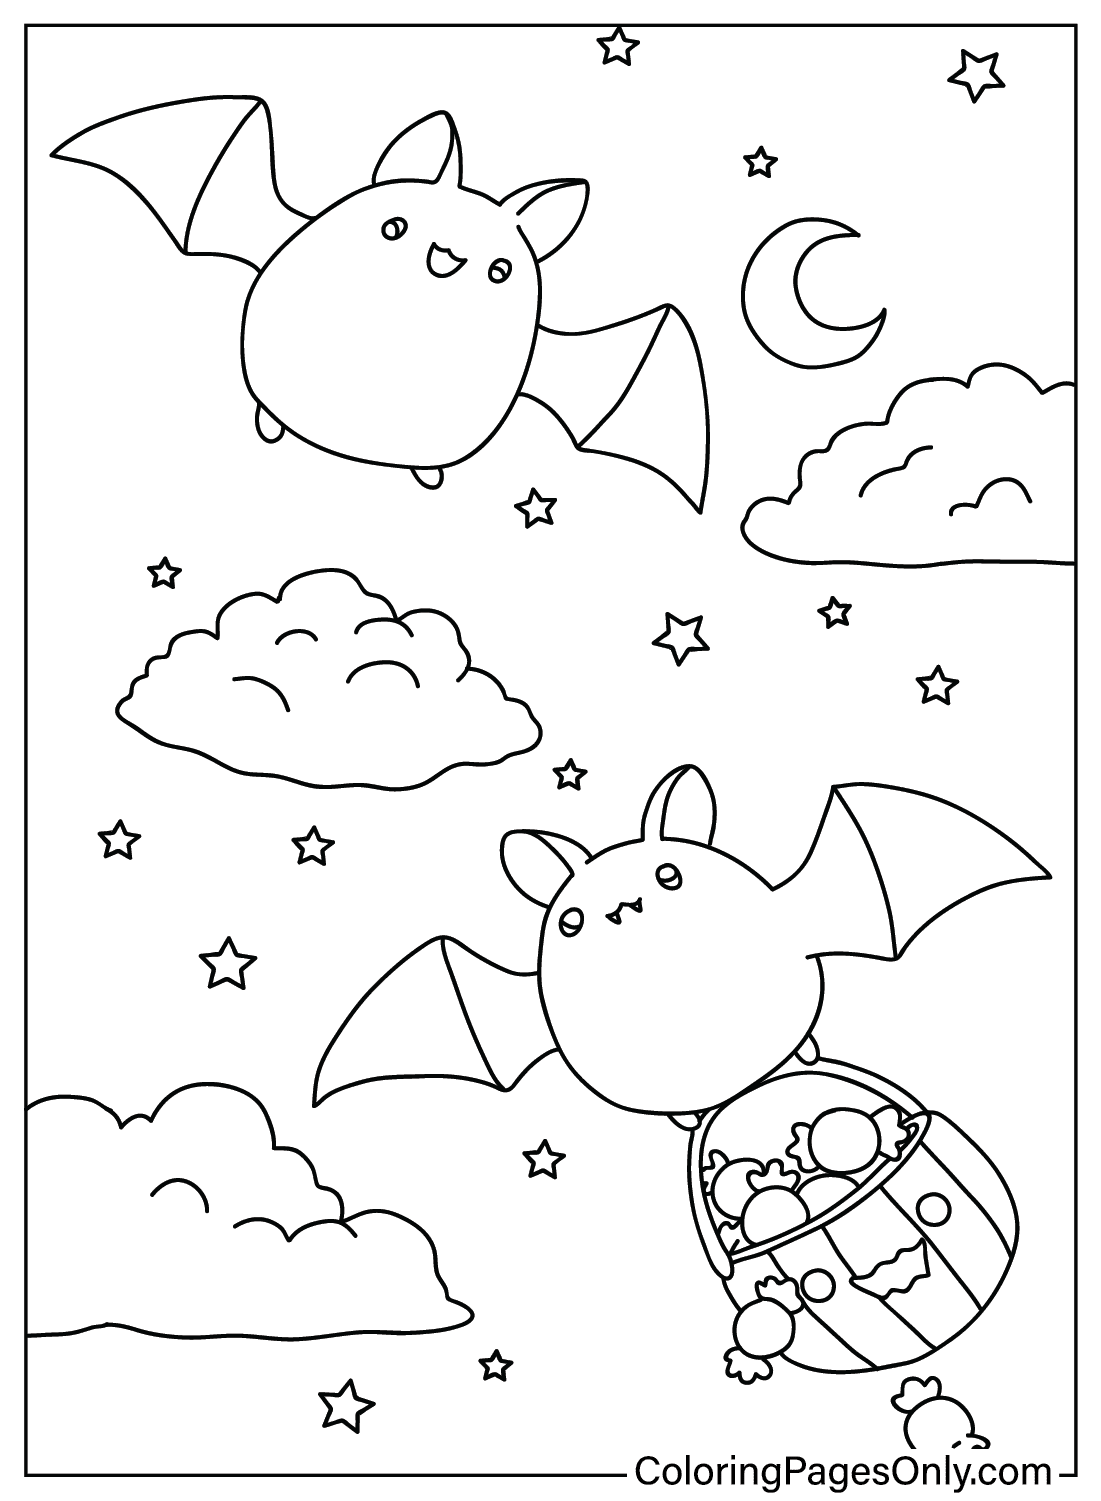 Página para colorear de Halloween de murciélago kawaii de Kawaii Halloween